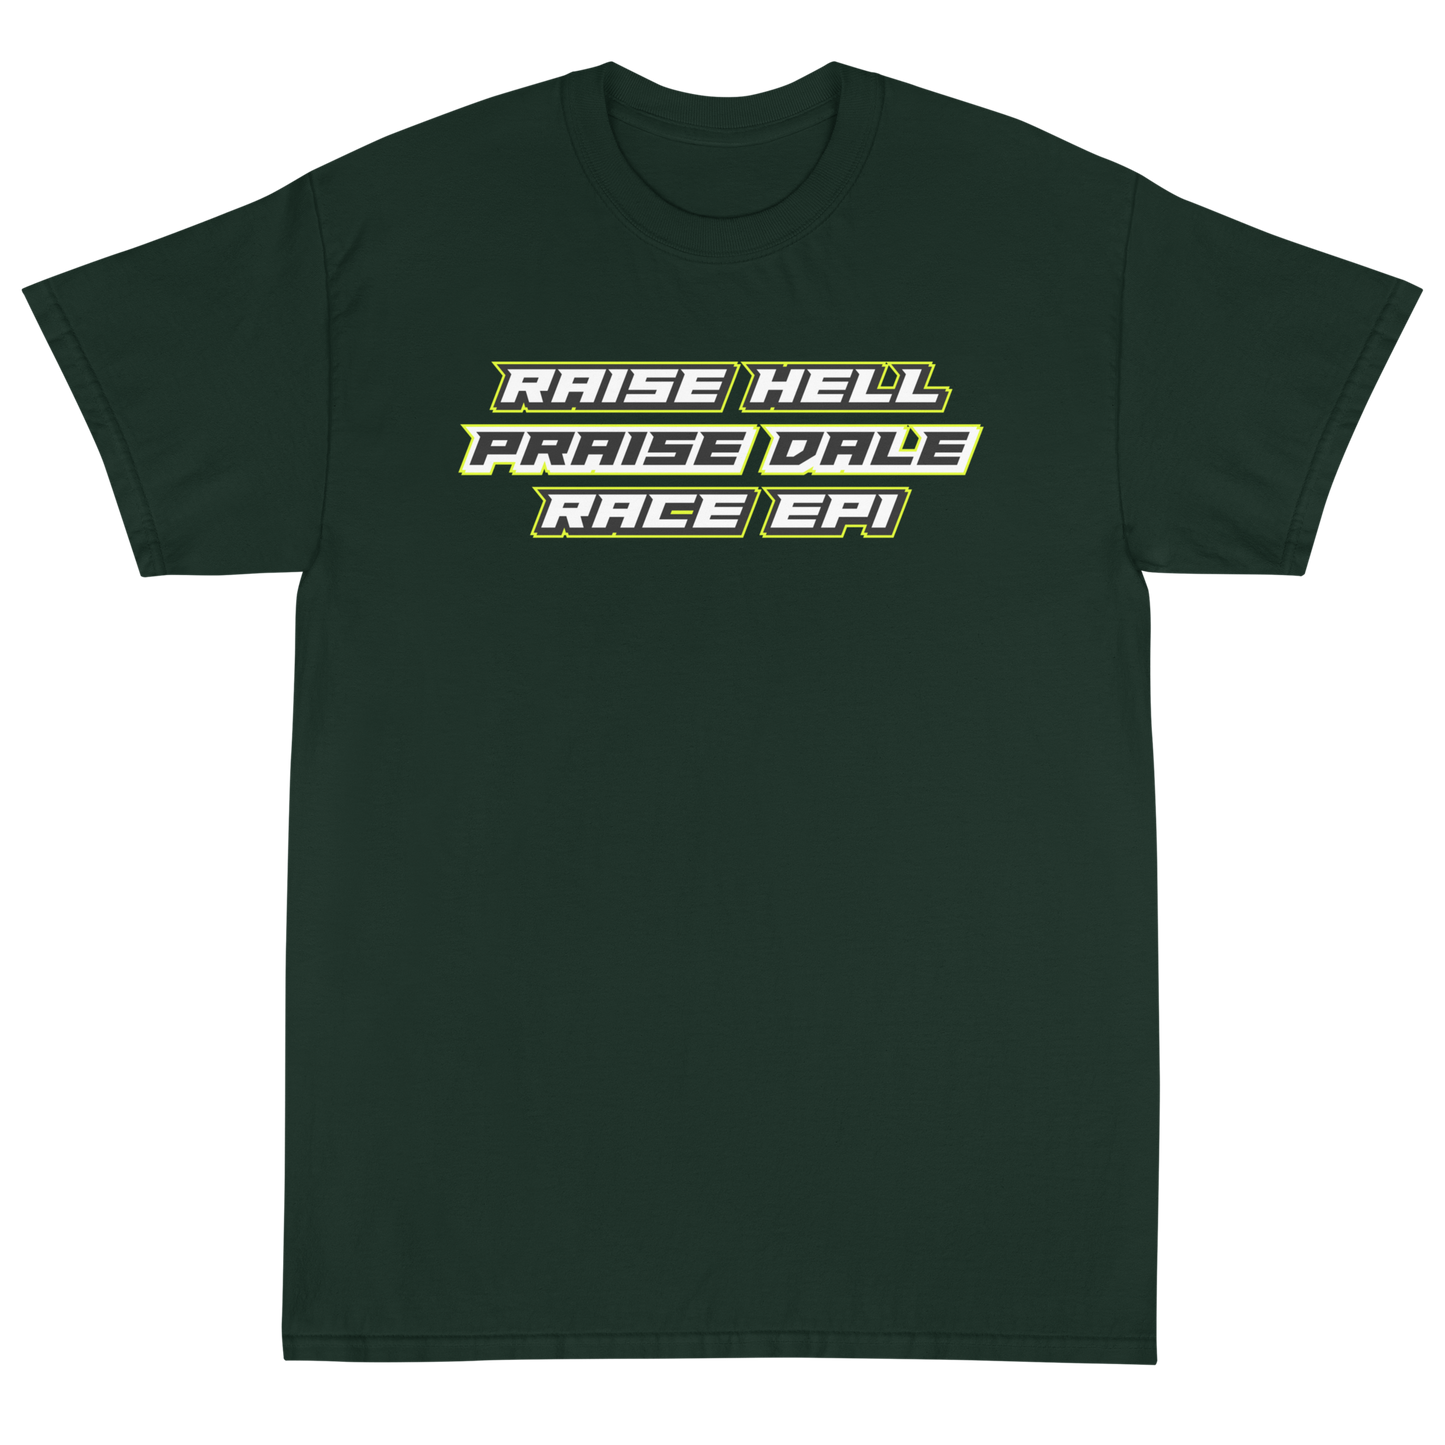 Men’s “Raise Hell, Praise Dale” T-Shirt